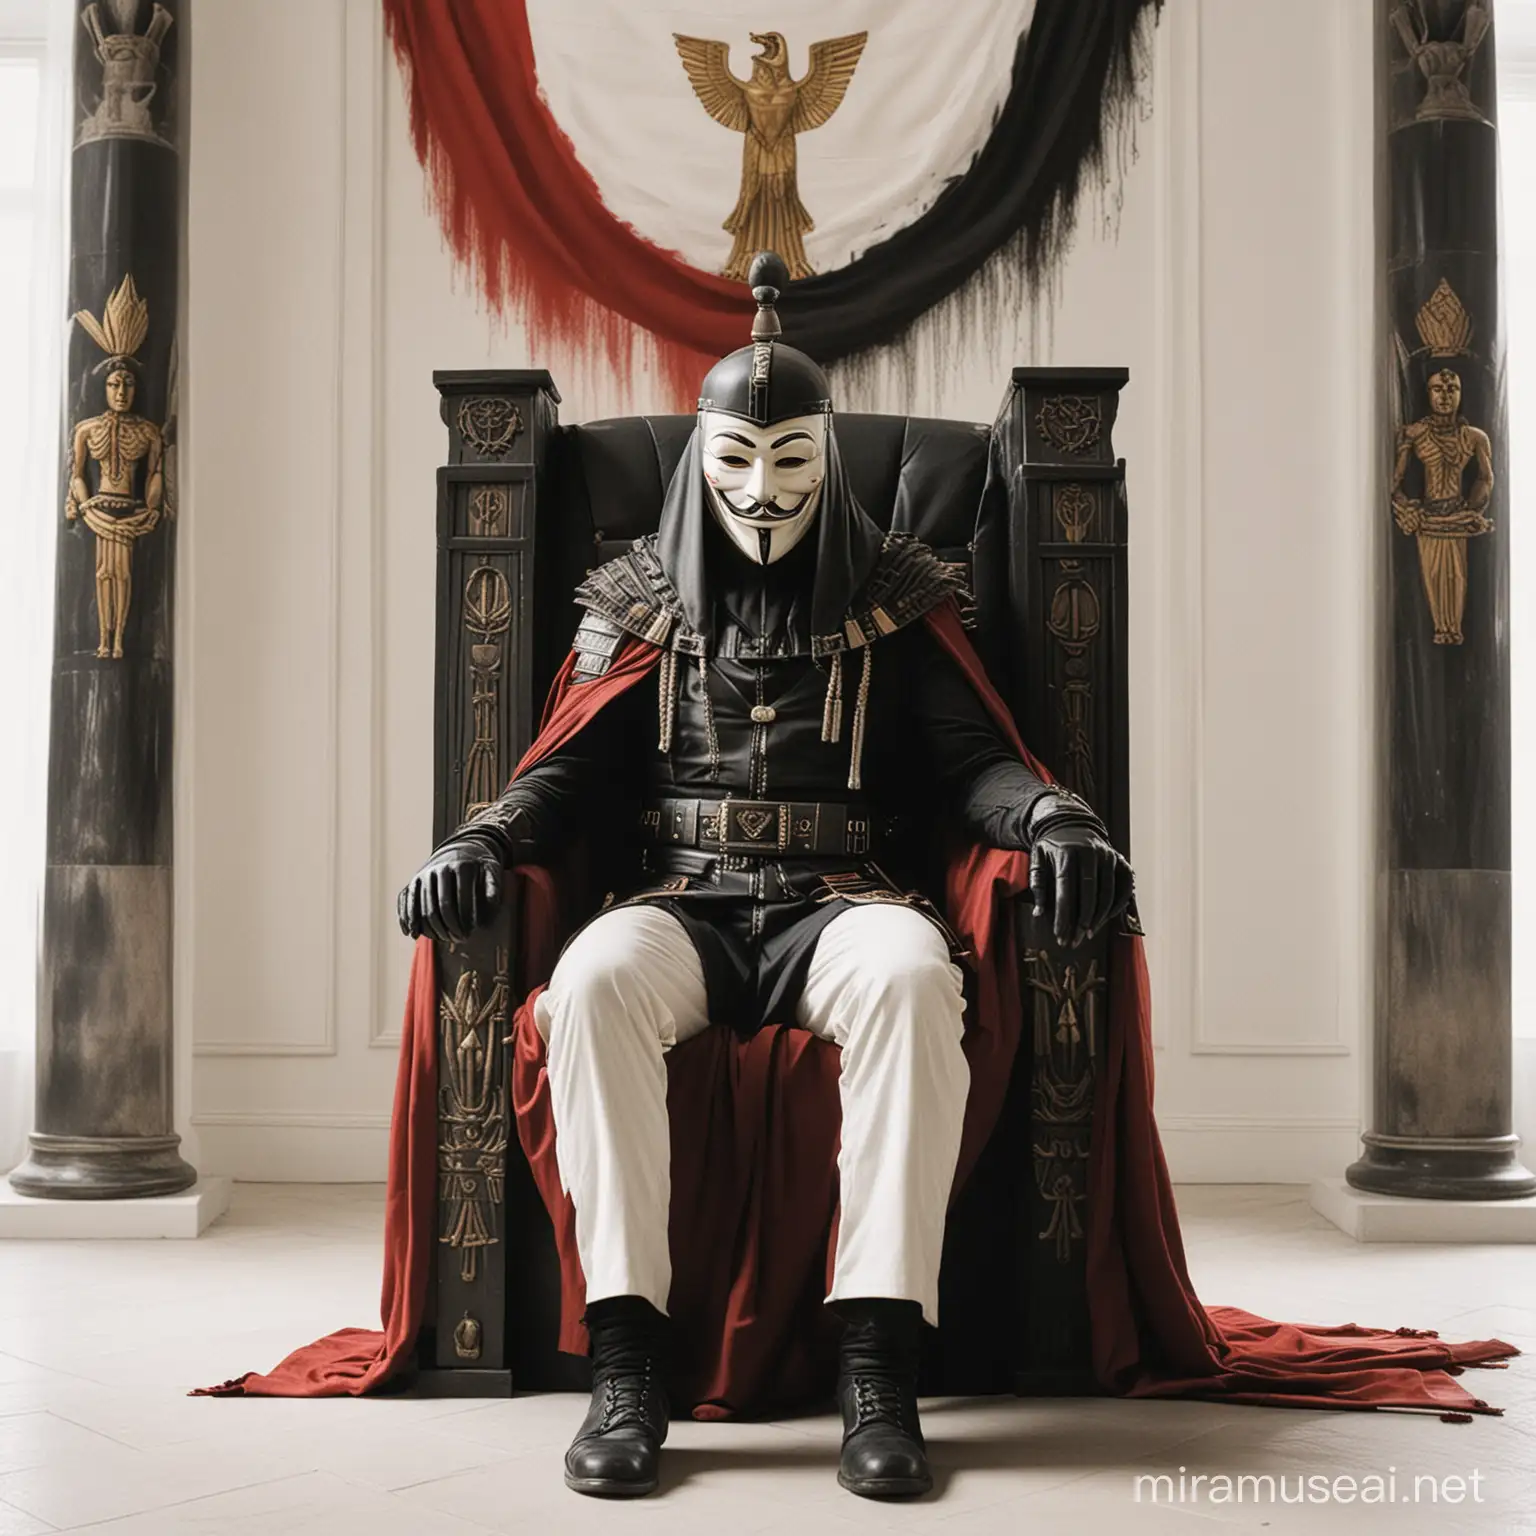 V for Vendetta Sitting on White Throne with Egyptian Flag Background